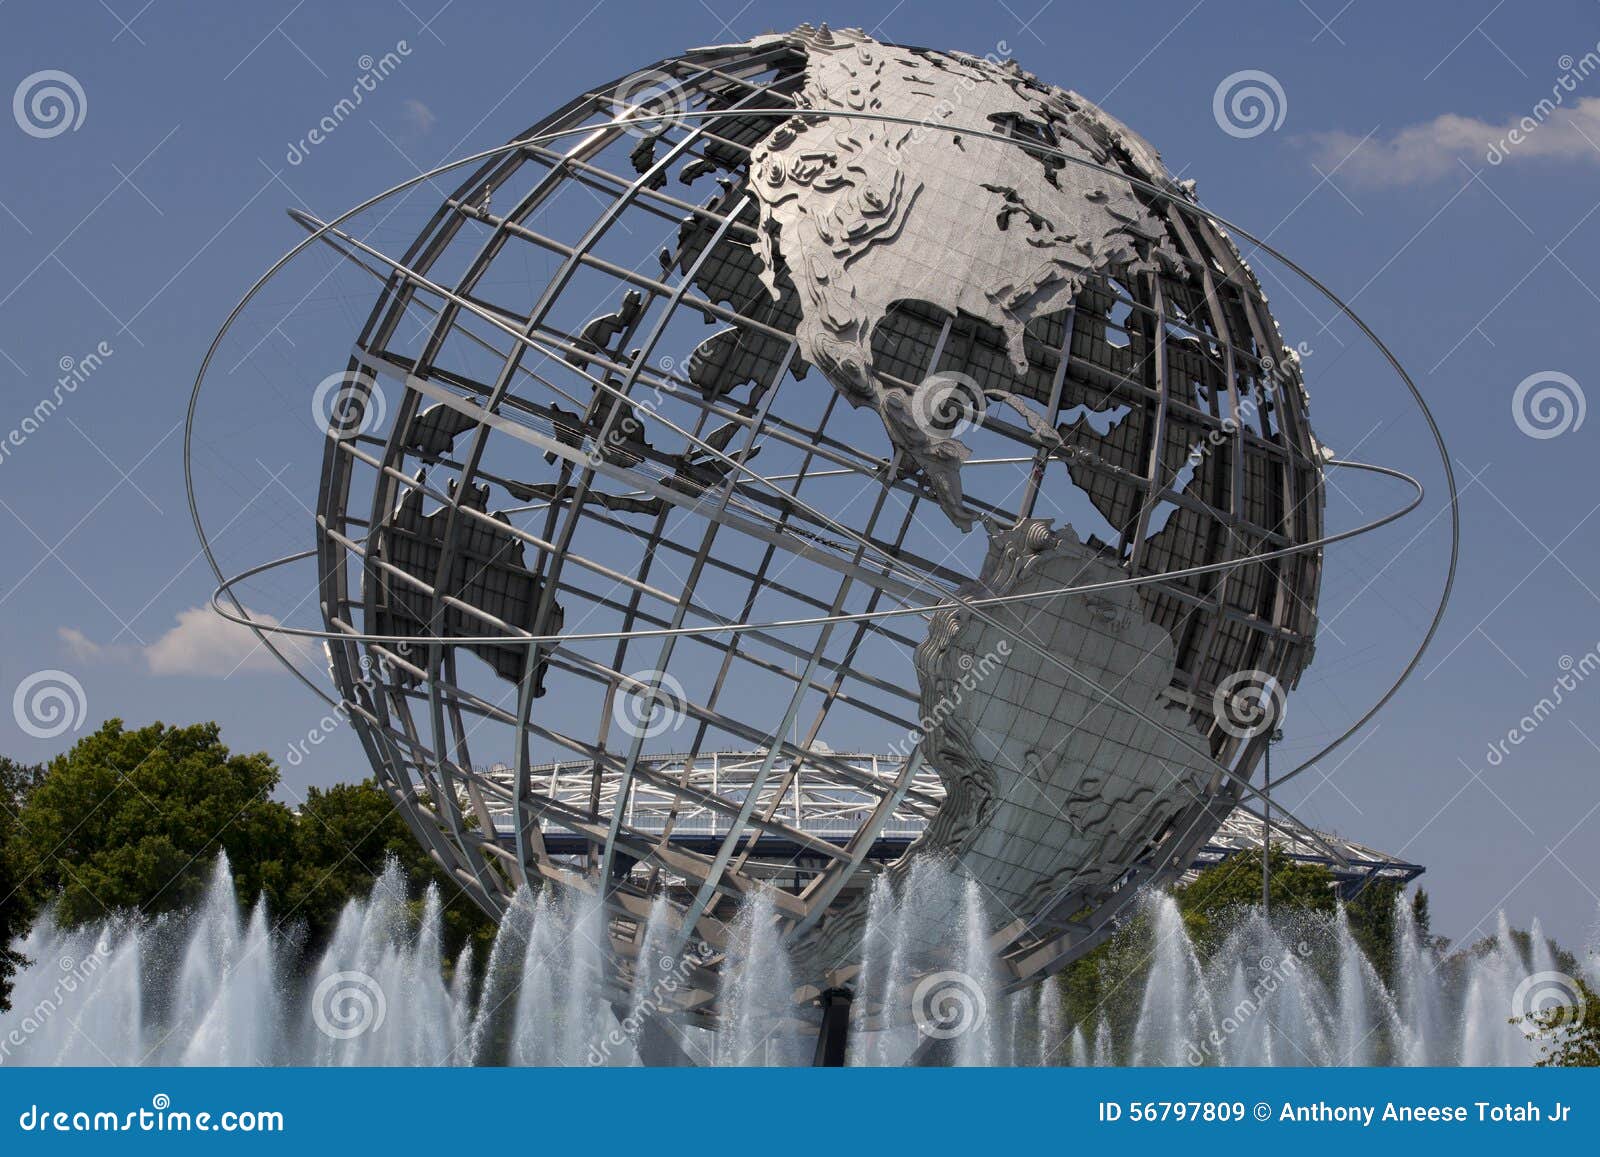 Unisphere in Fushing Meadows Corona Park, Queens - New York